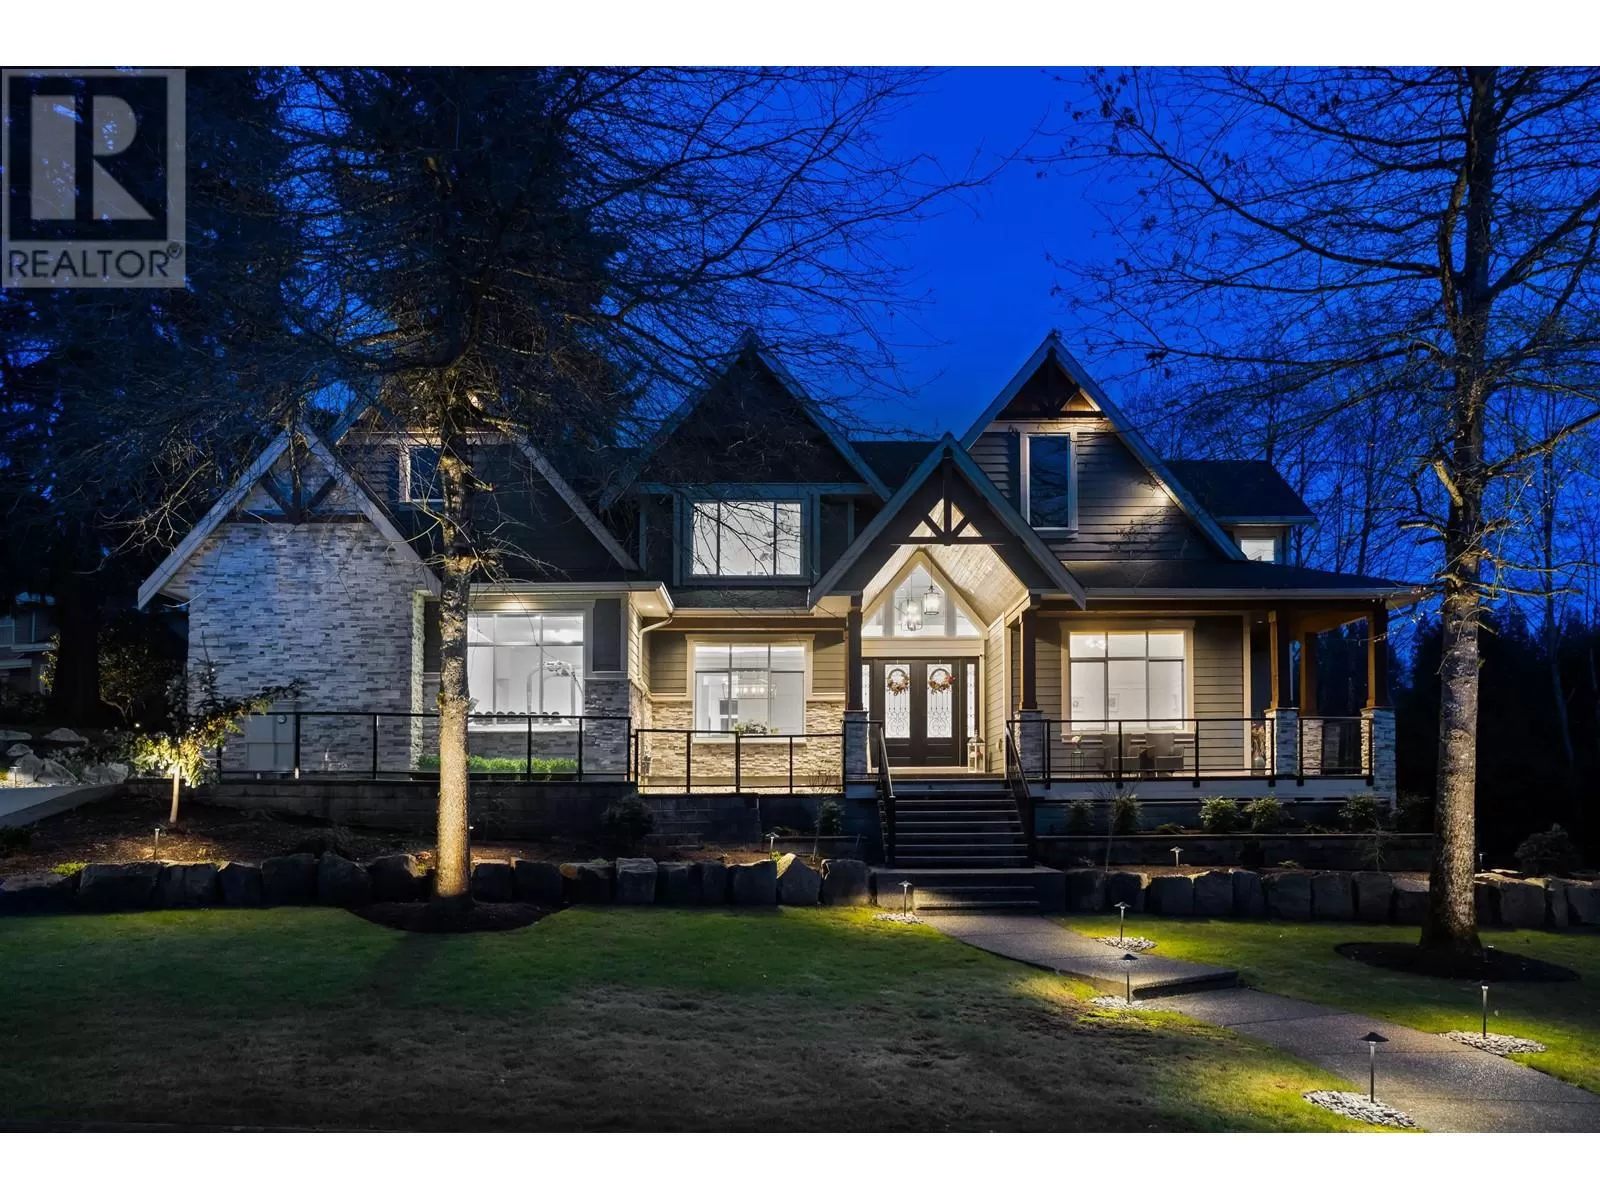 House for rent: 8 12530 241 Street, Maple Ridge, British Columbia V4R 2V8